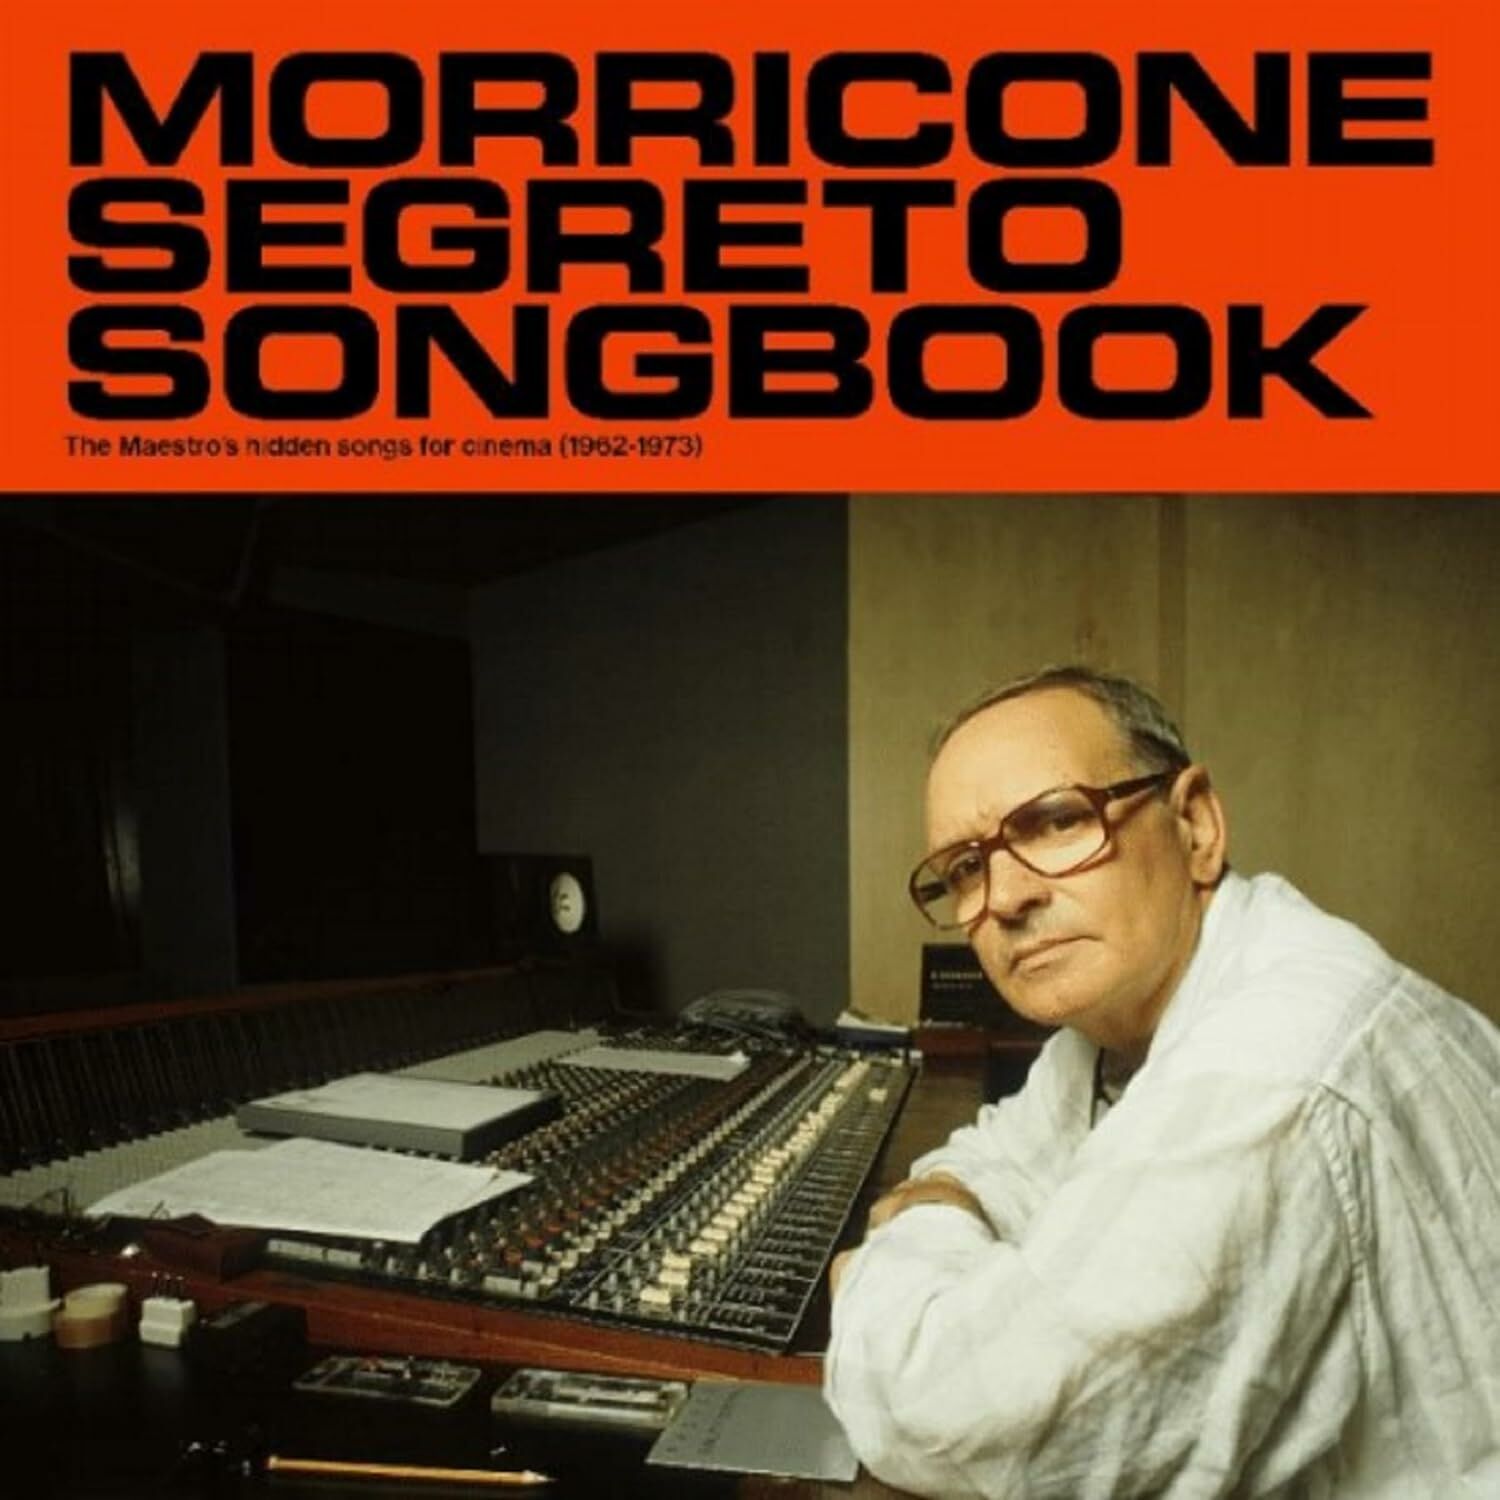 ENNIO MORRICONE - MORRICONE SEGRETO SONGBOOK / HIDDEN SONGS 1962-1973 - 2LP COMPILATION 2023 GATEFOLD SIFIR PLAK